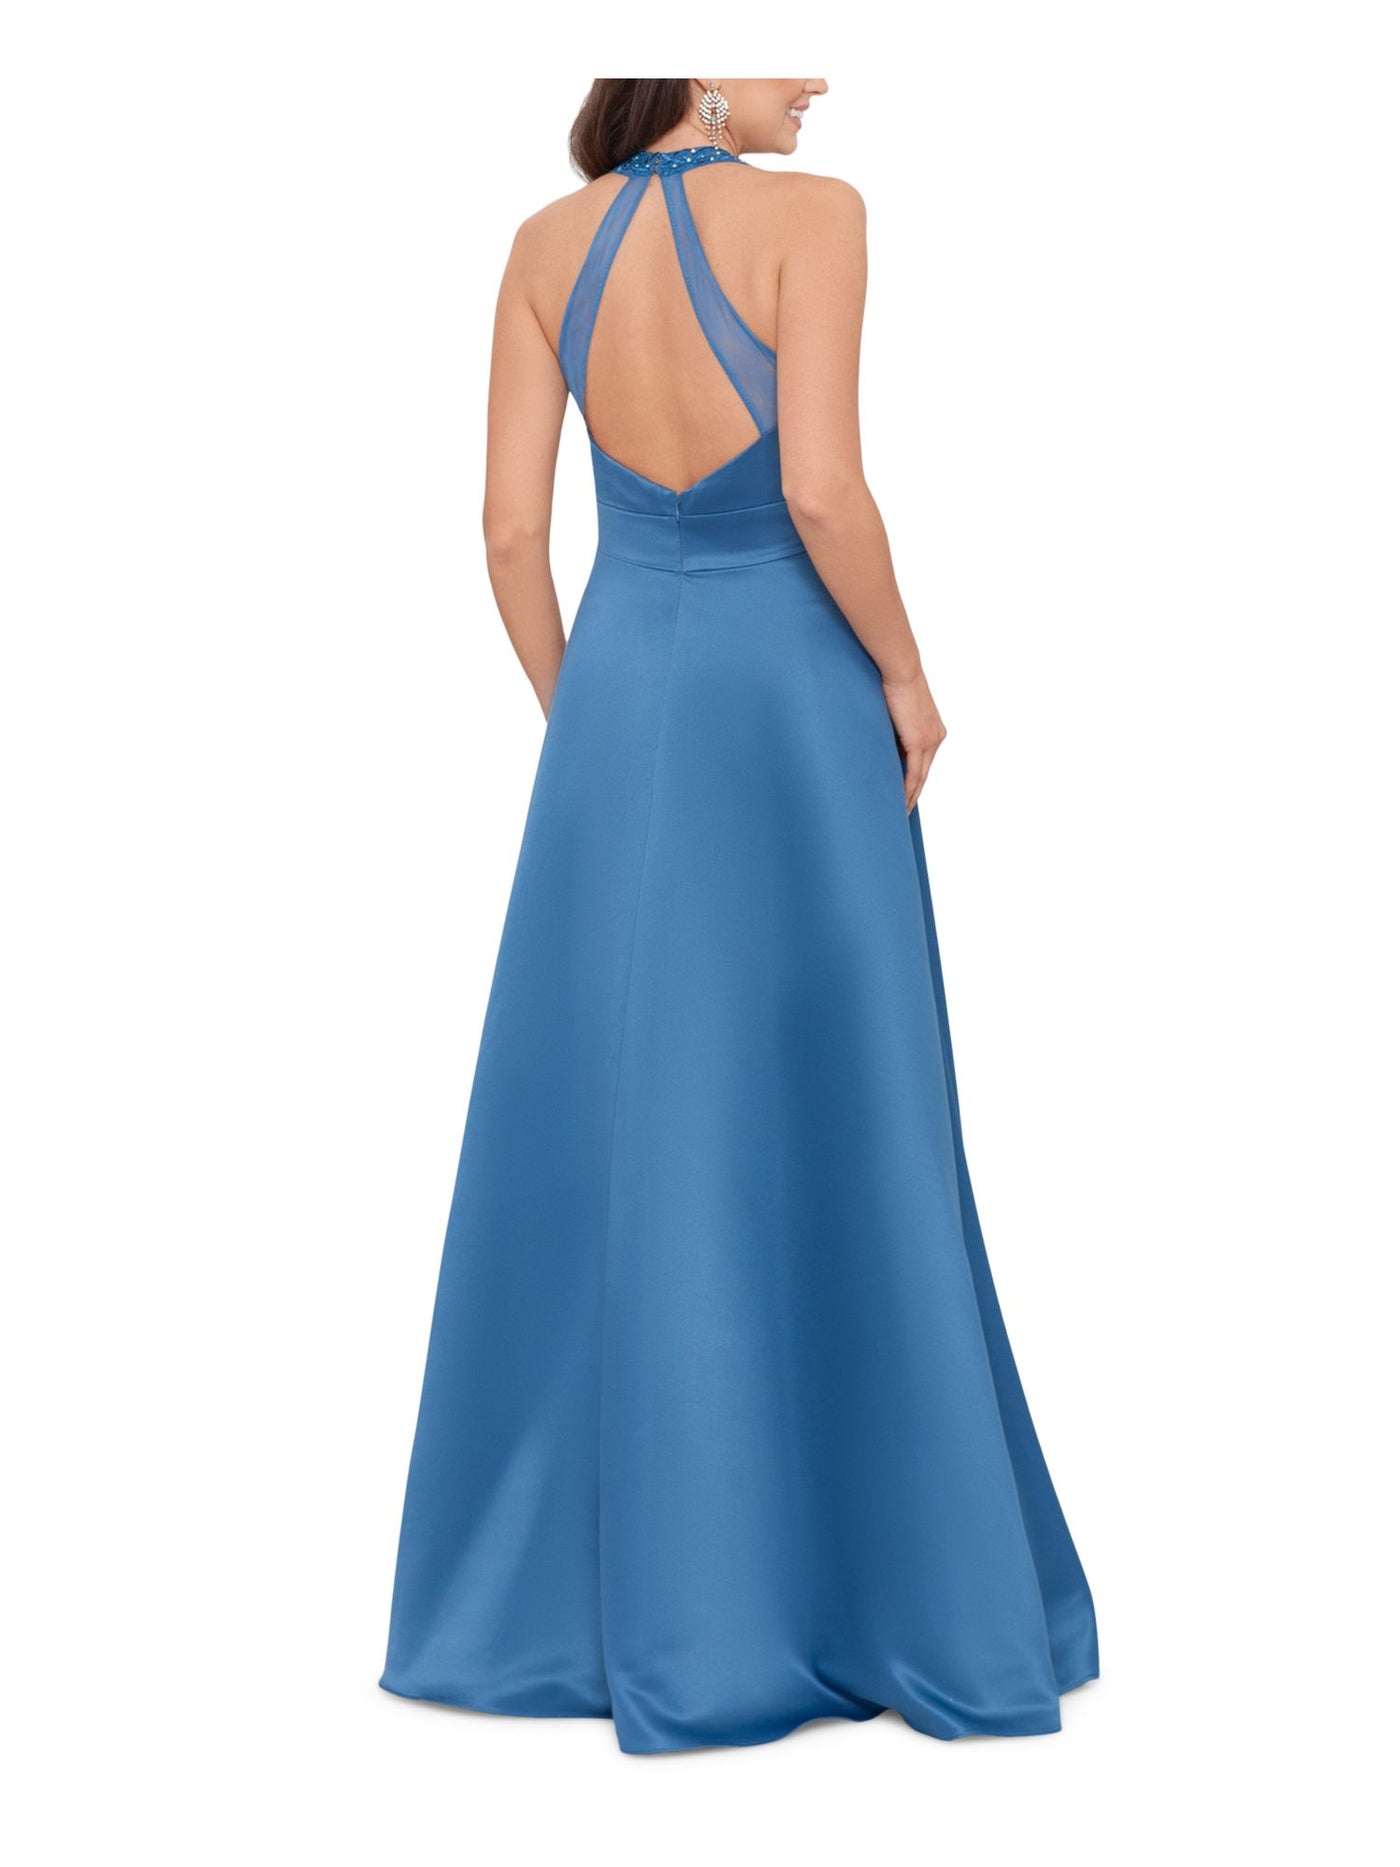 BLONDIE Womens Blue Embellished Zippered Plunging V-neck Mesh Back Straps Sleeveless Full-Length Prom Fit + Flare Dress Juniors 3